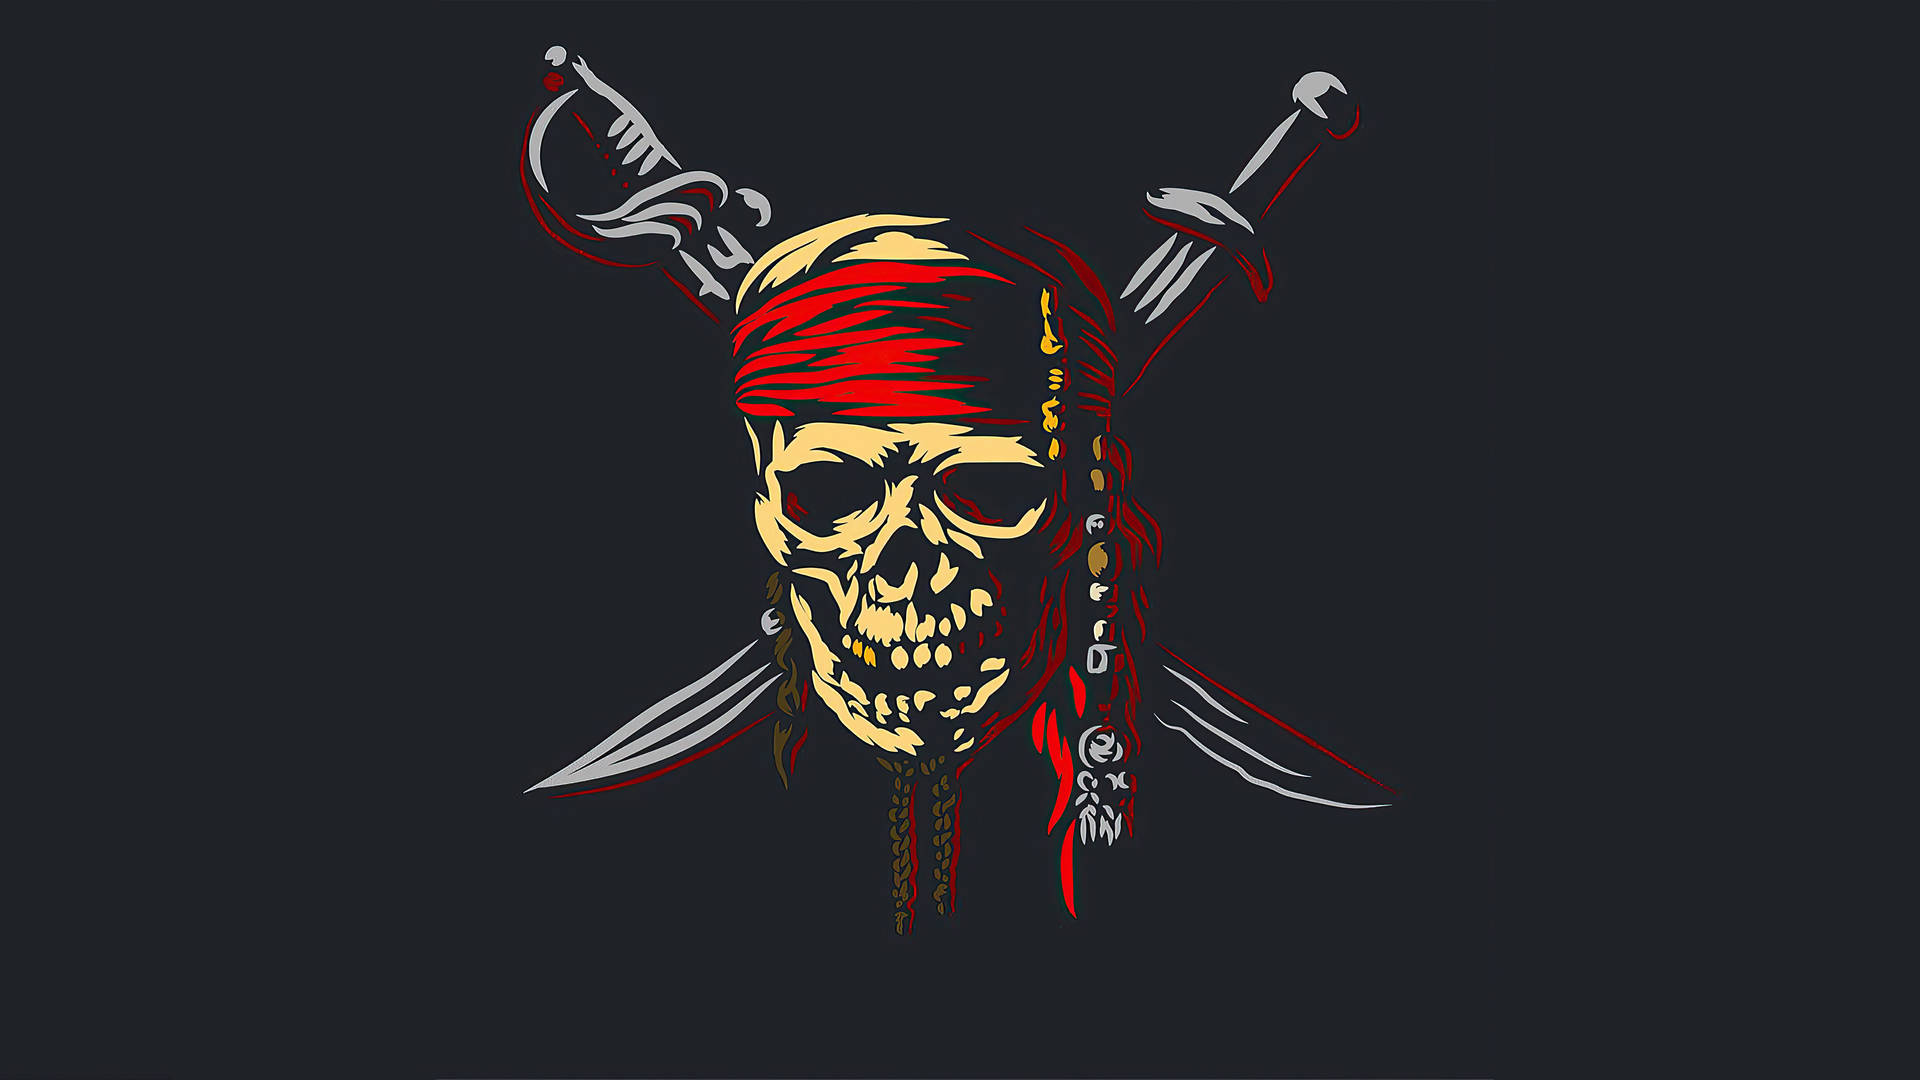 4K Pirate Skull With Swords Wallpaper